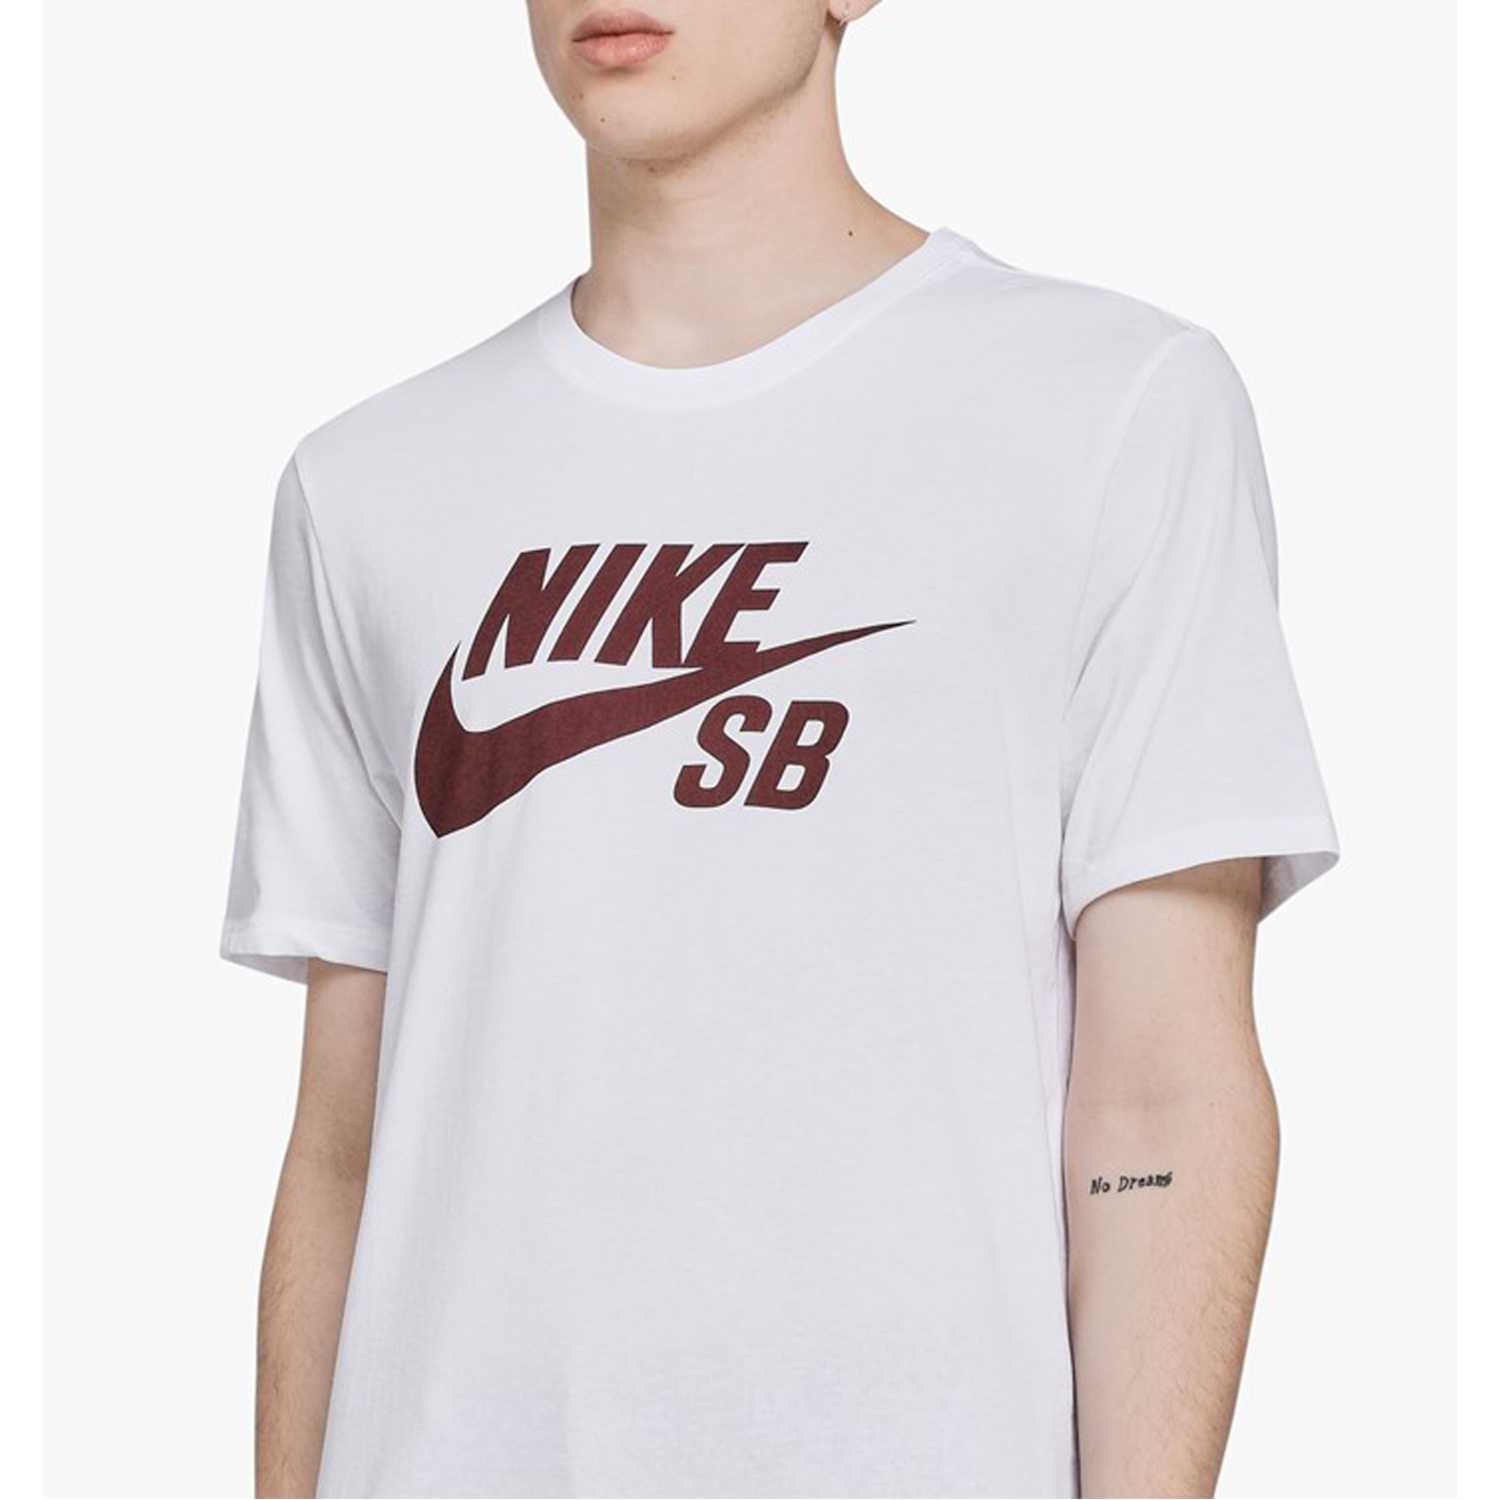 simplemente neutral digerir Playera Nike SB Logo – Dealer skate shop